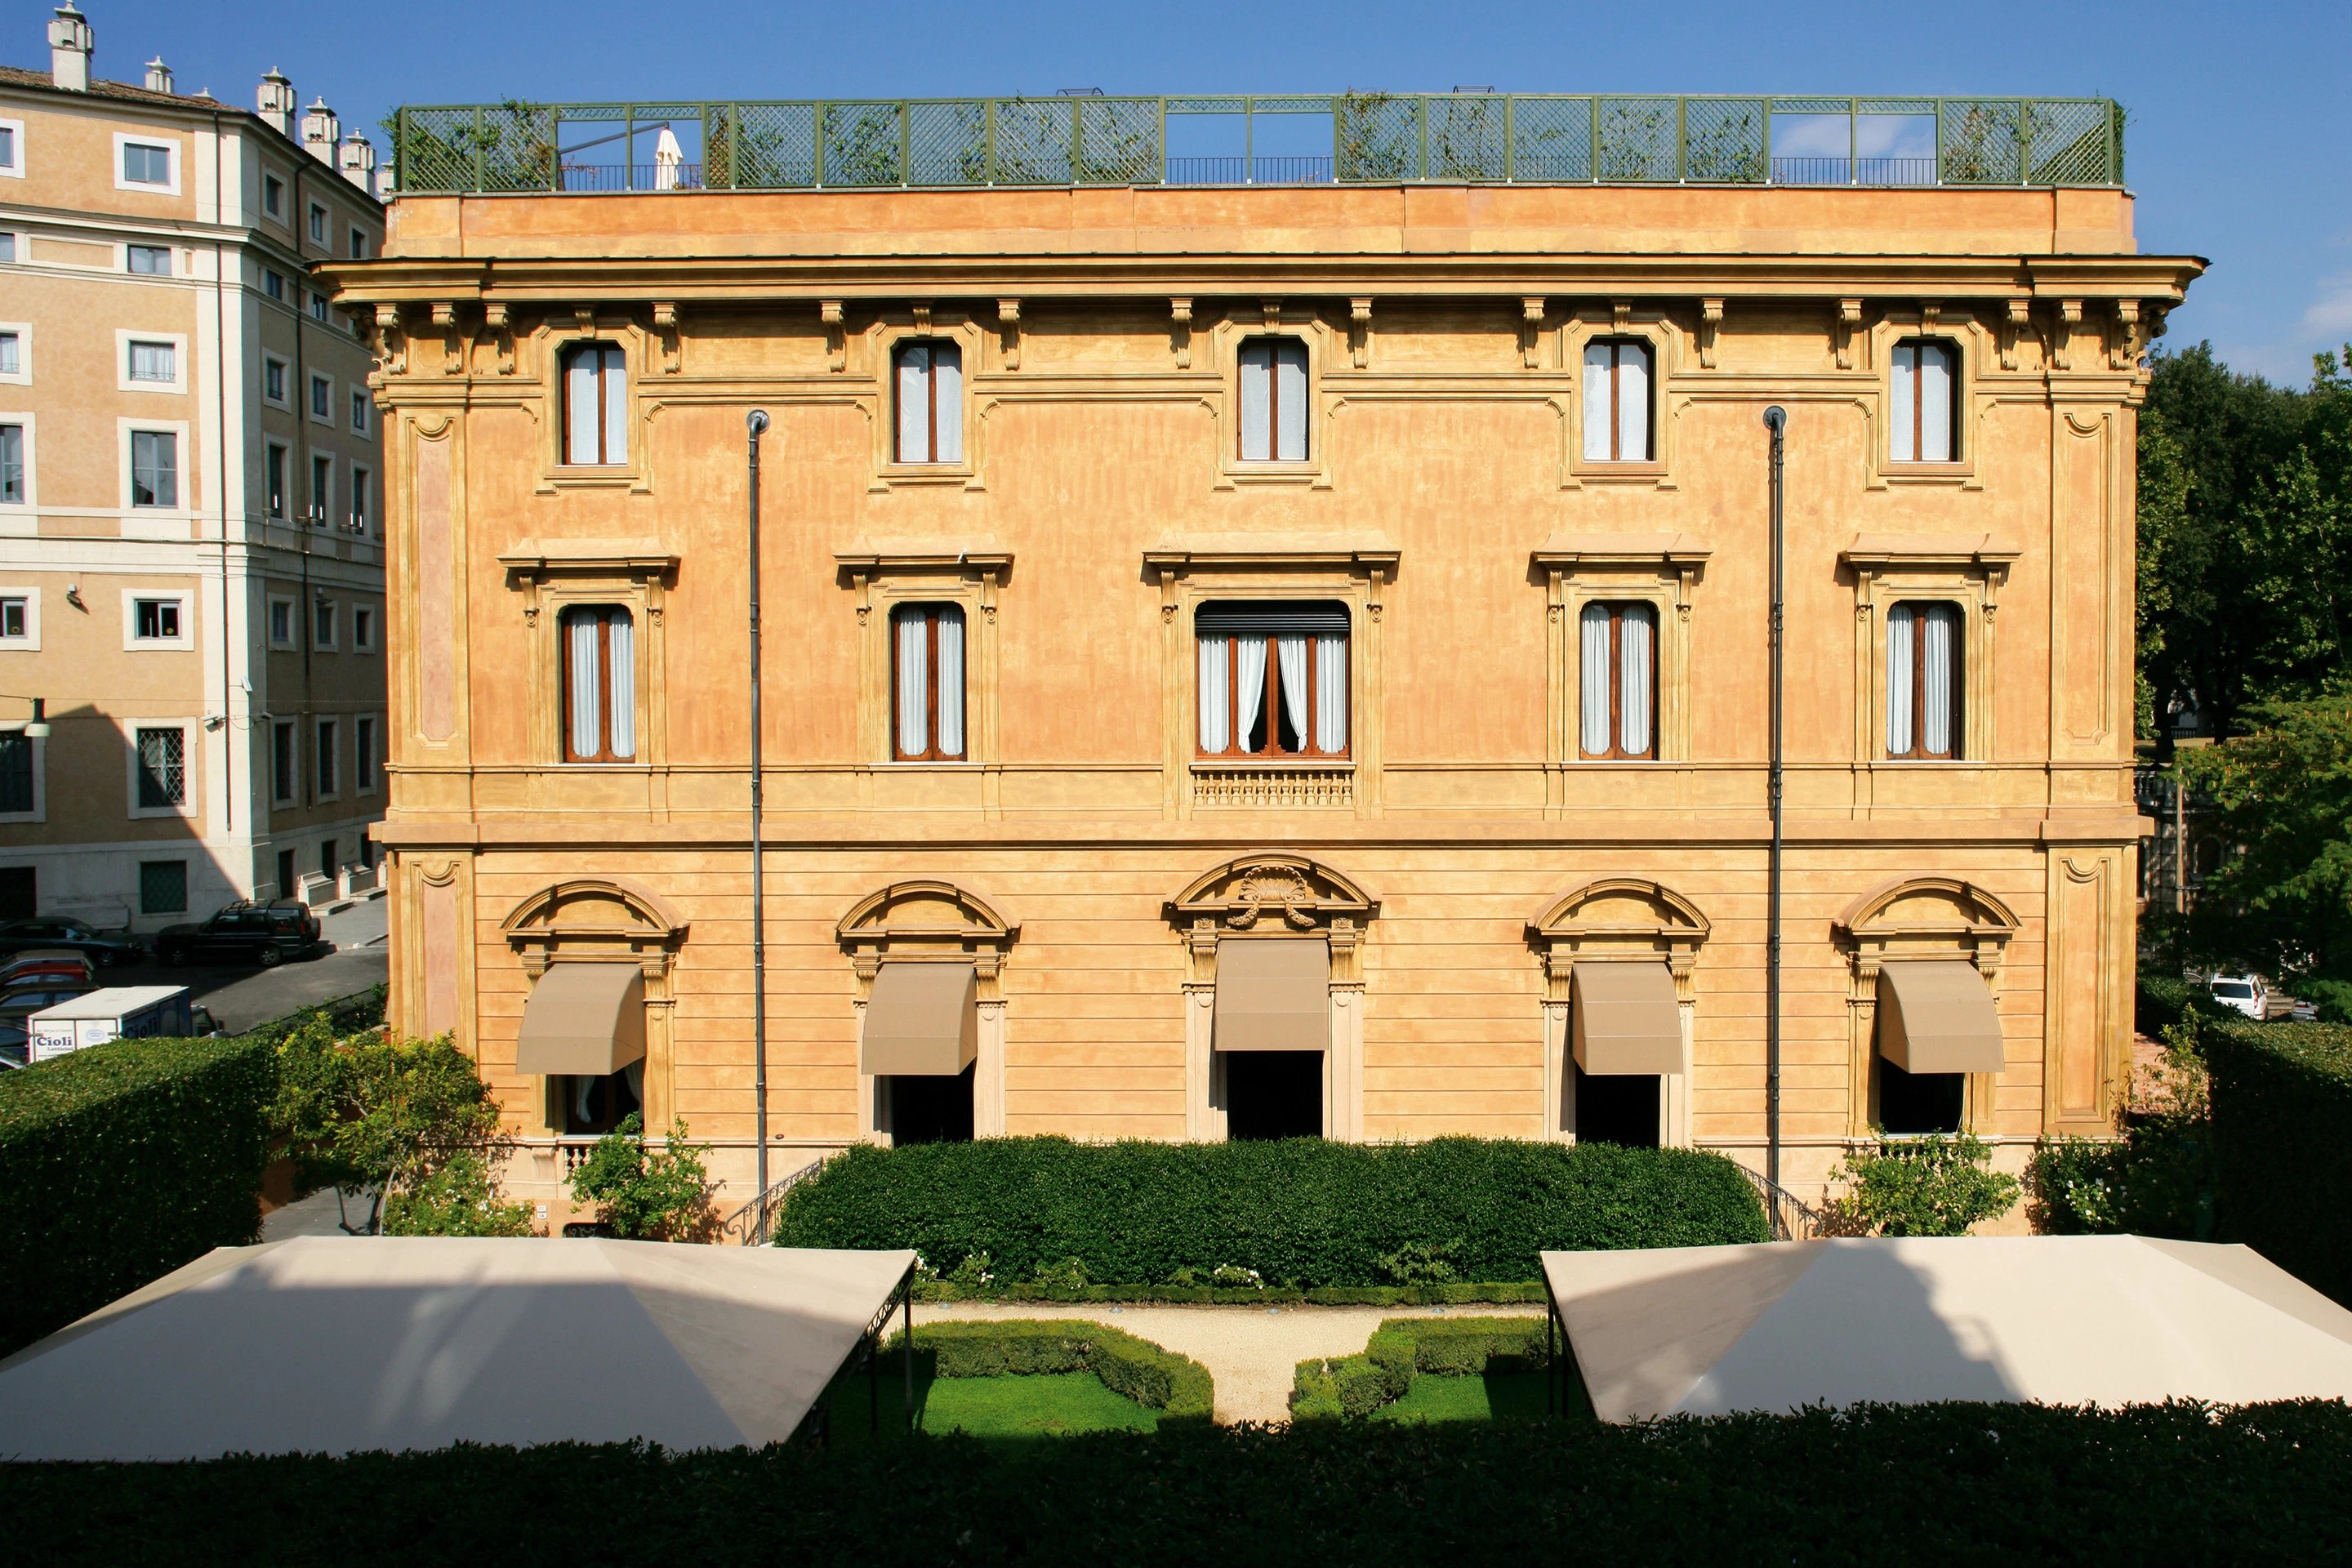 Luxury hotel Villa Spalletti Trivelli 5 stars Roma Italia inside Facade with a courtyard